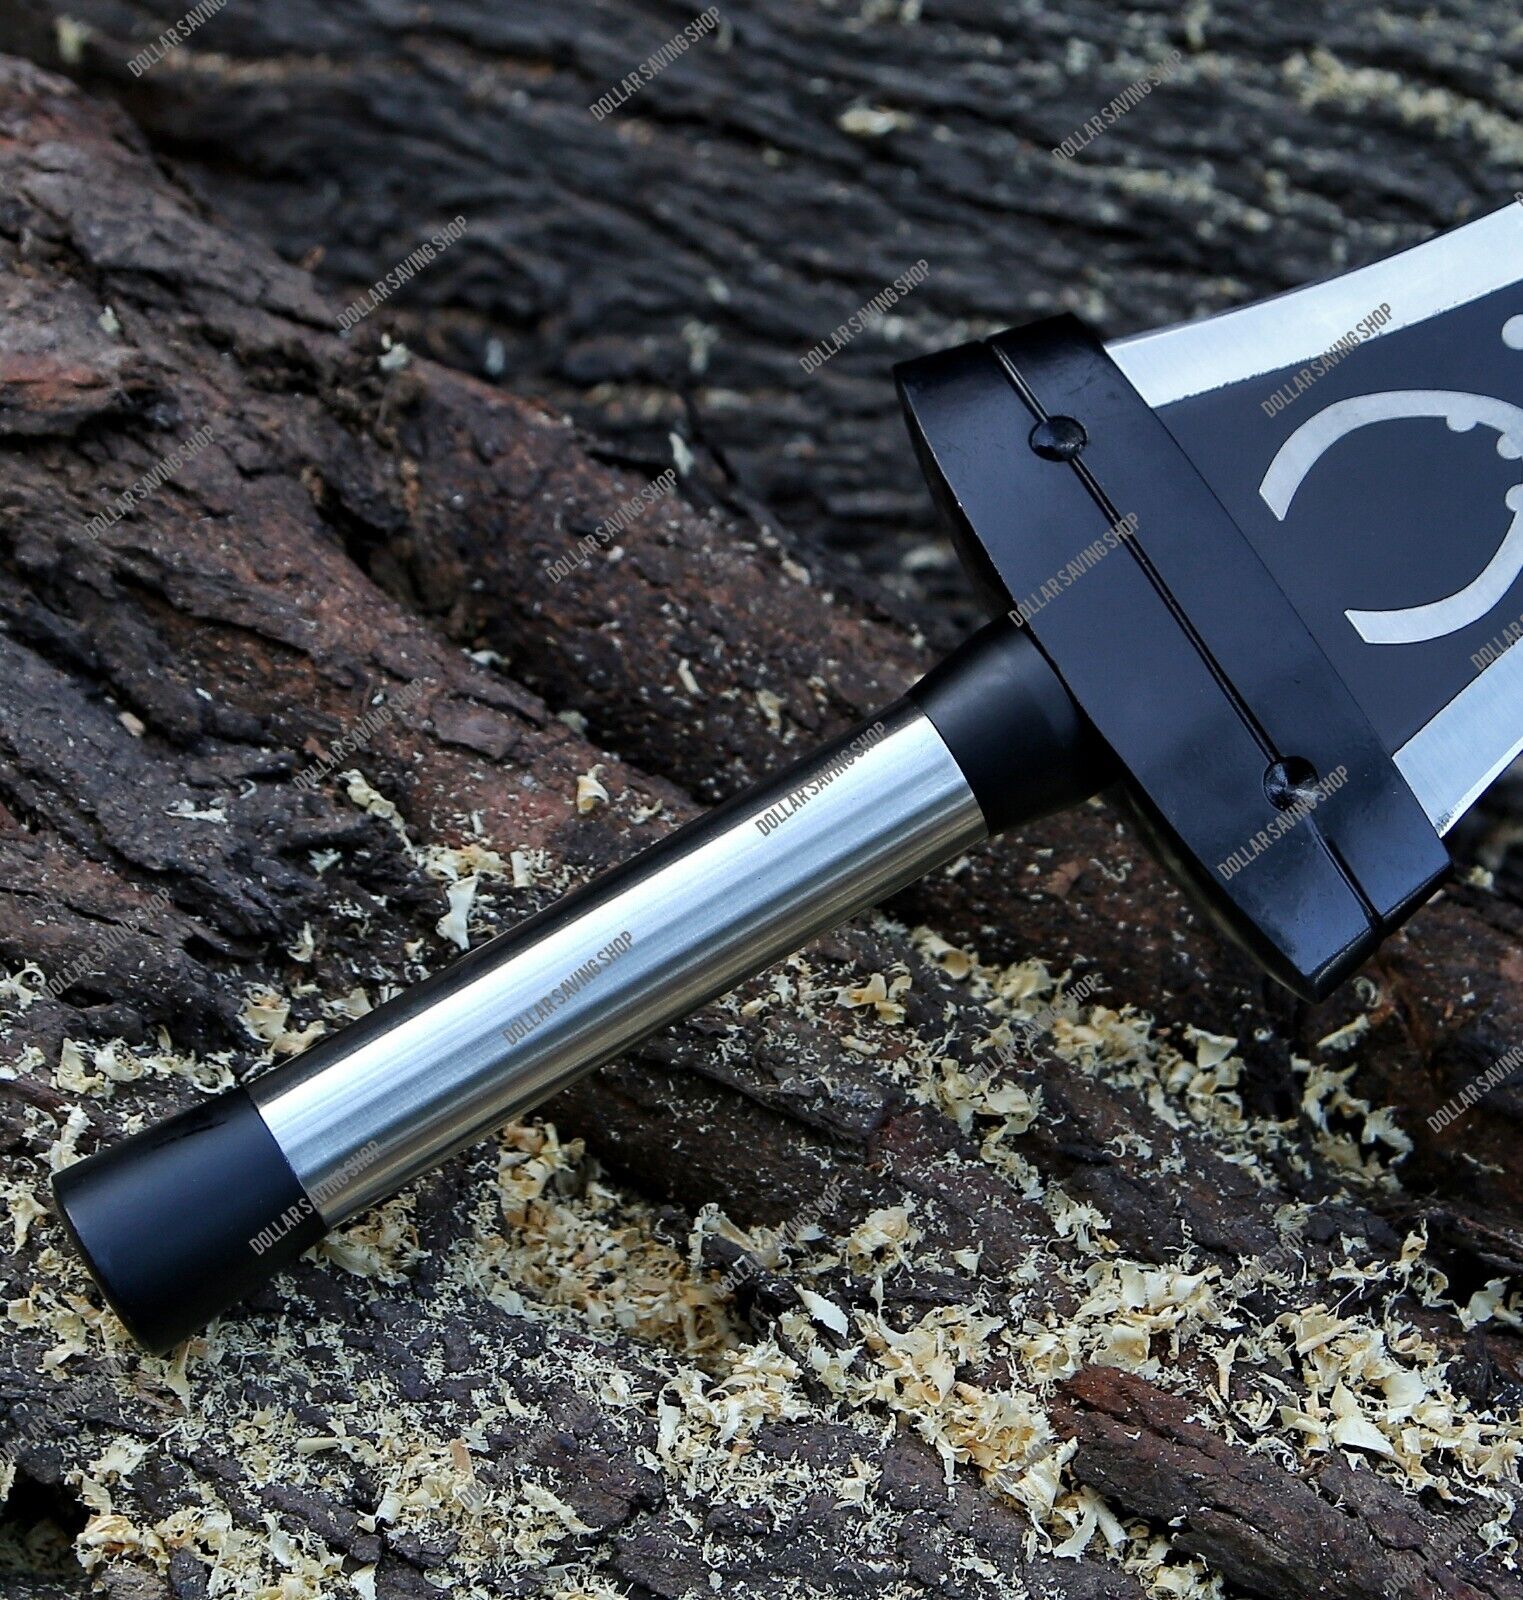 Unique Handmade Carbon Steel Kirito's Sword, Anime Sword with Leather Sheath.